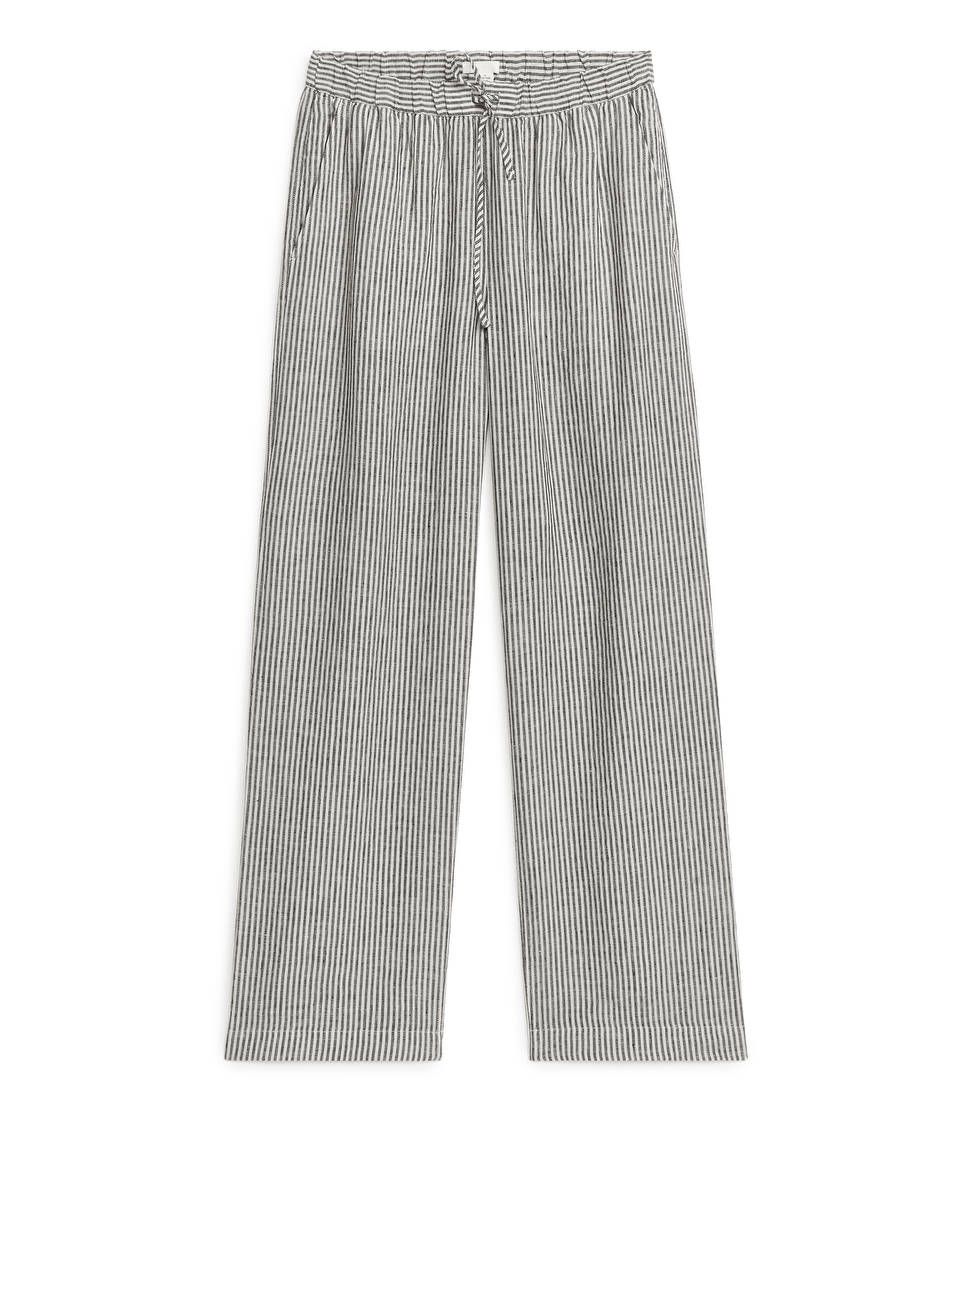 Linen Drawstring Trousers - Off White/Black - ARKET GB | ARKET